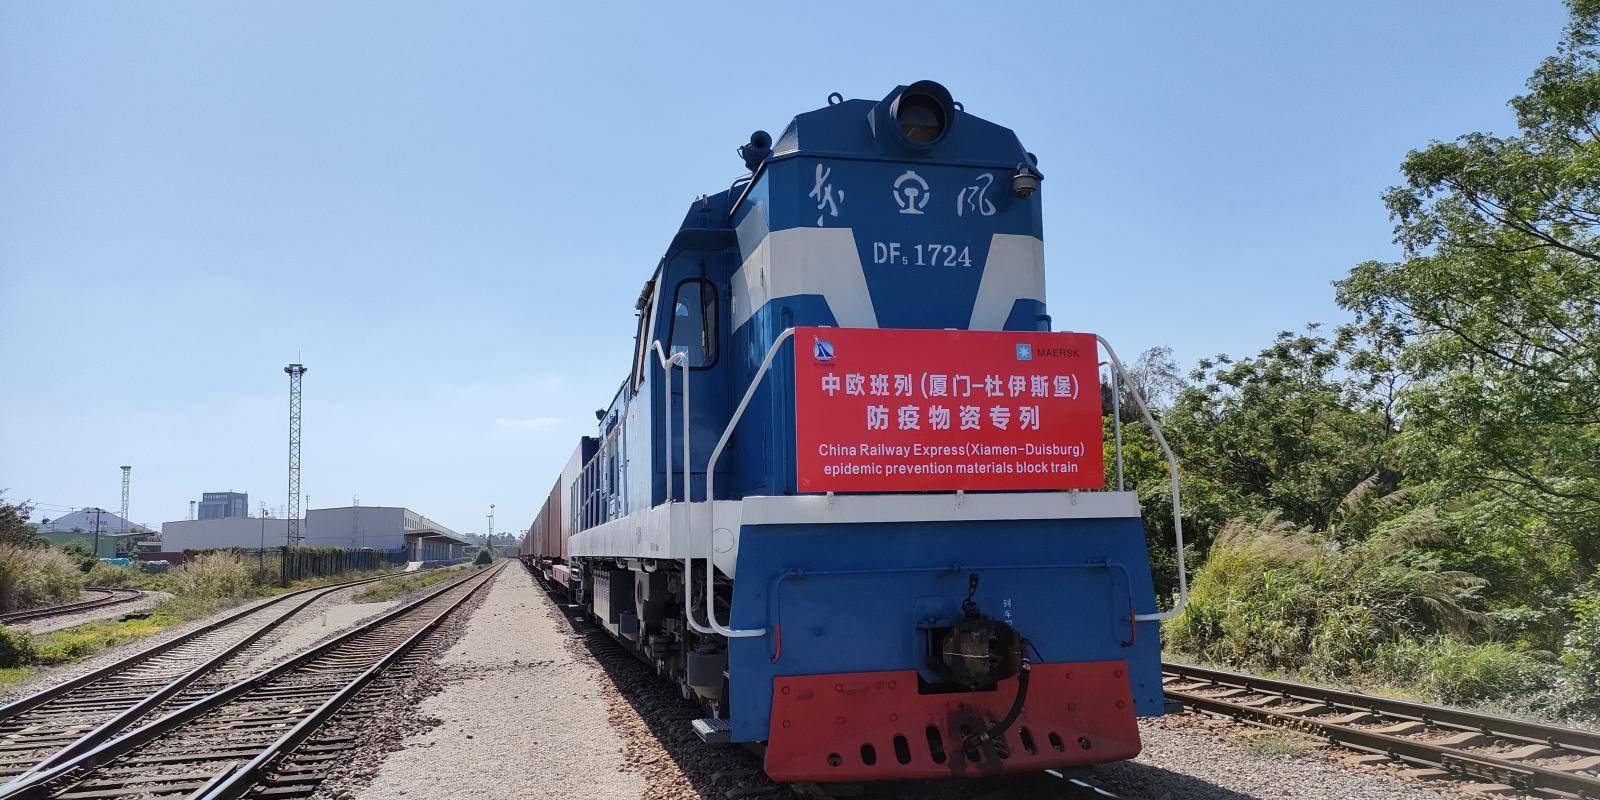 A Europe-China train